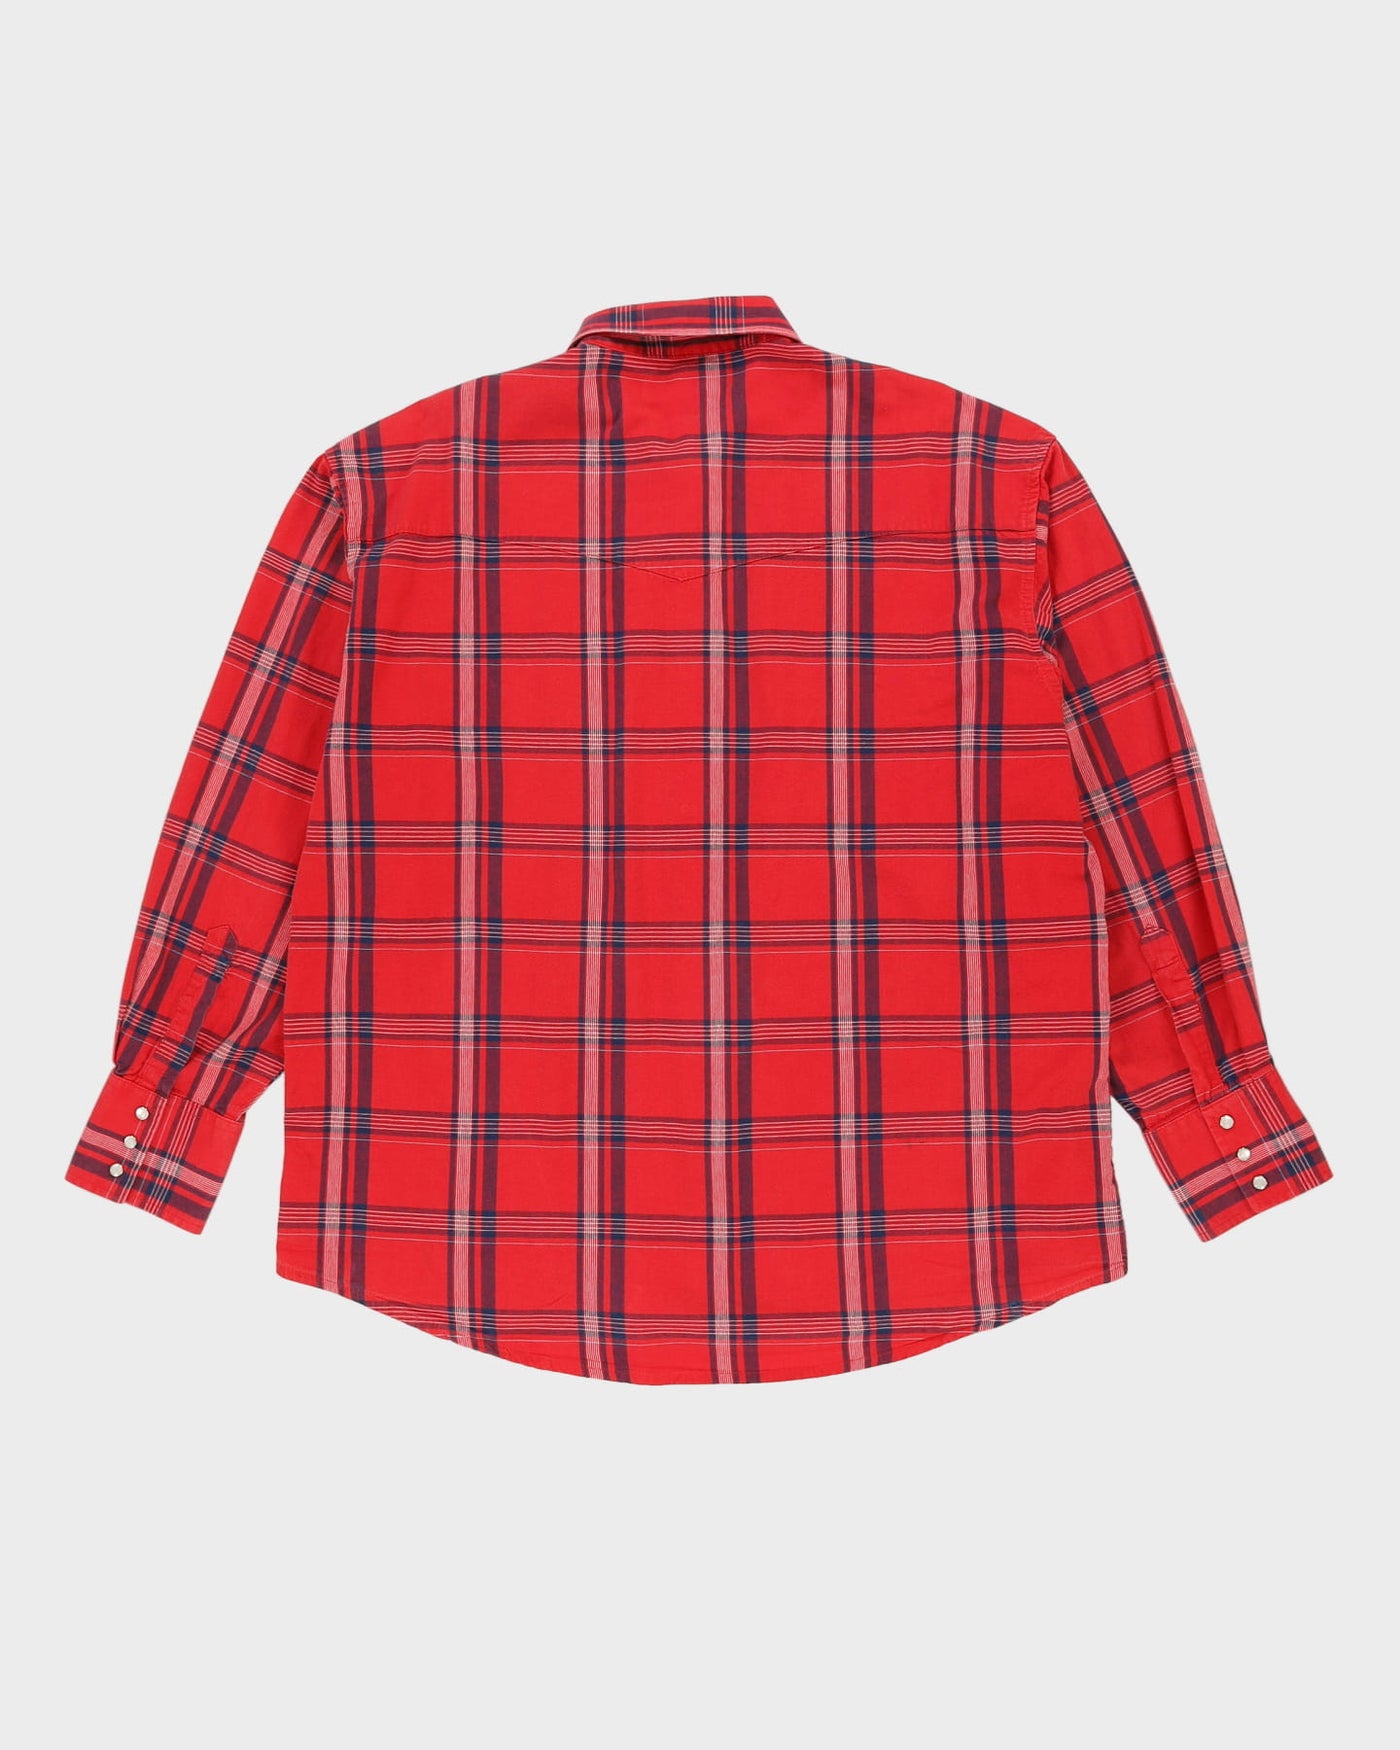 Wrangler Red Check Flannel Shirt - XL